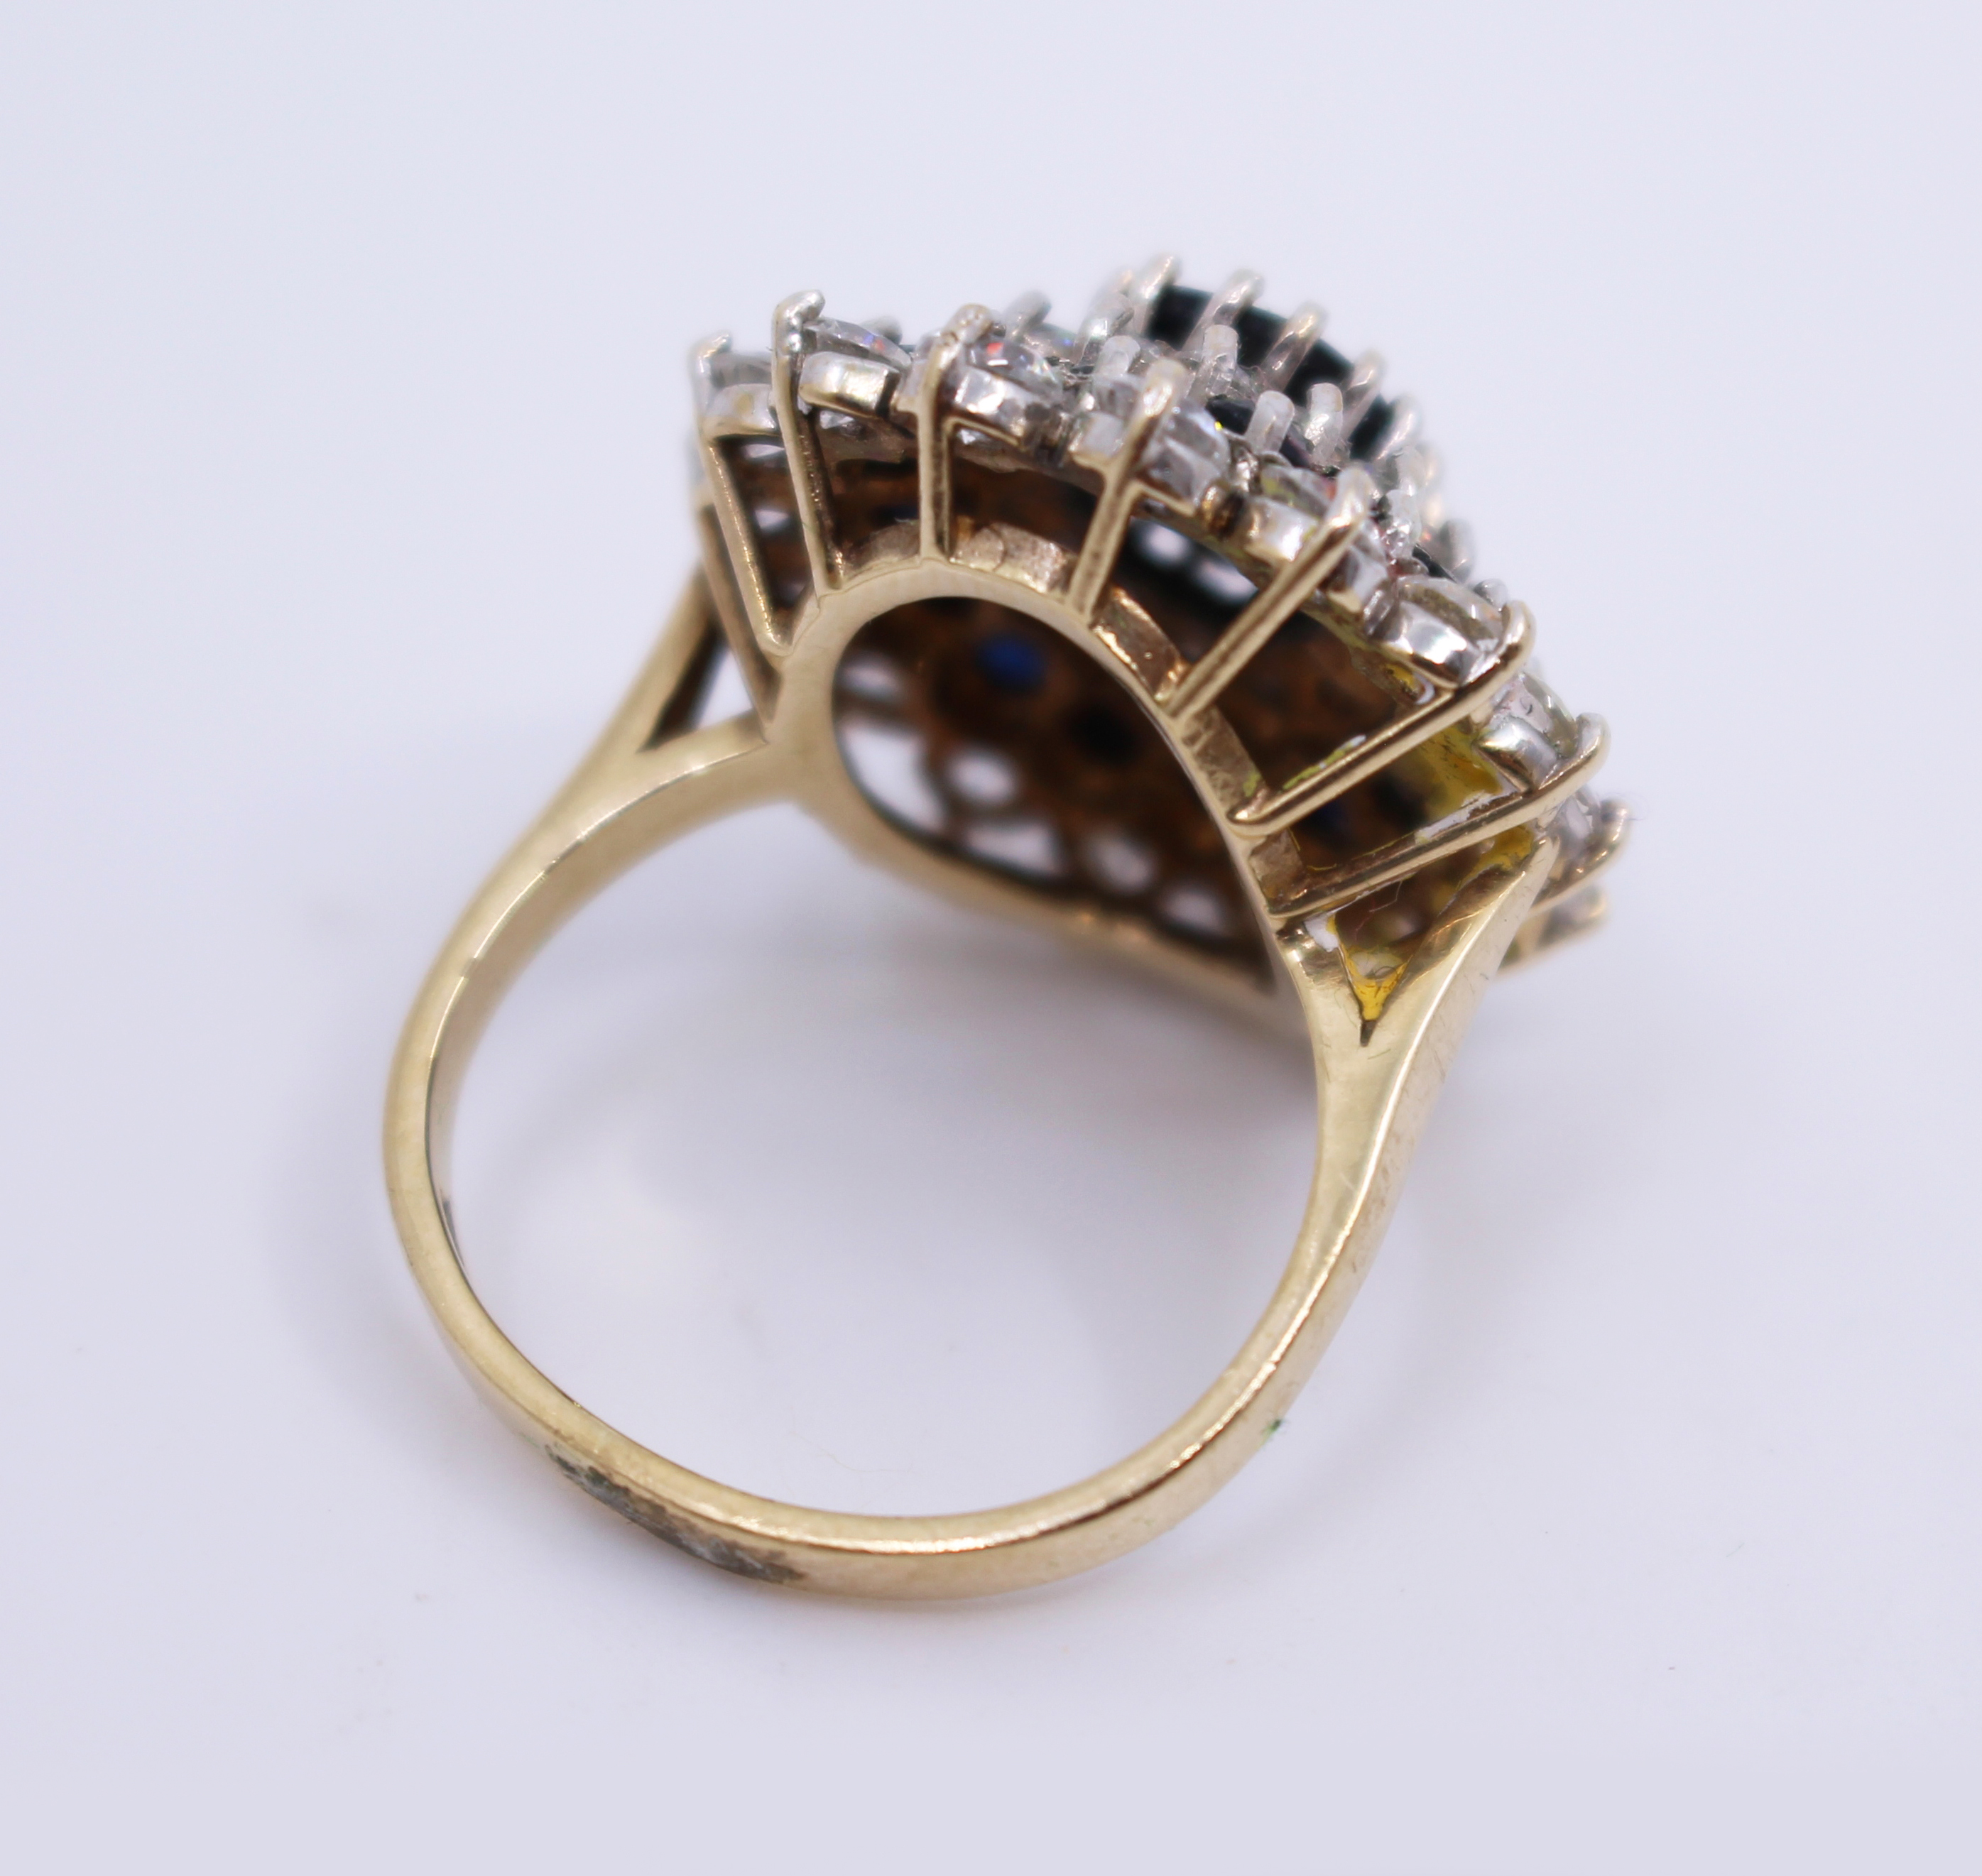 Decorative Sapphire & Diamond Style 9ct Gold Ring - Image 4 of 4